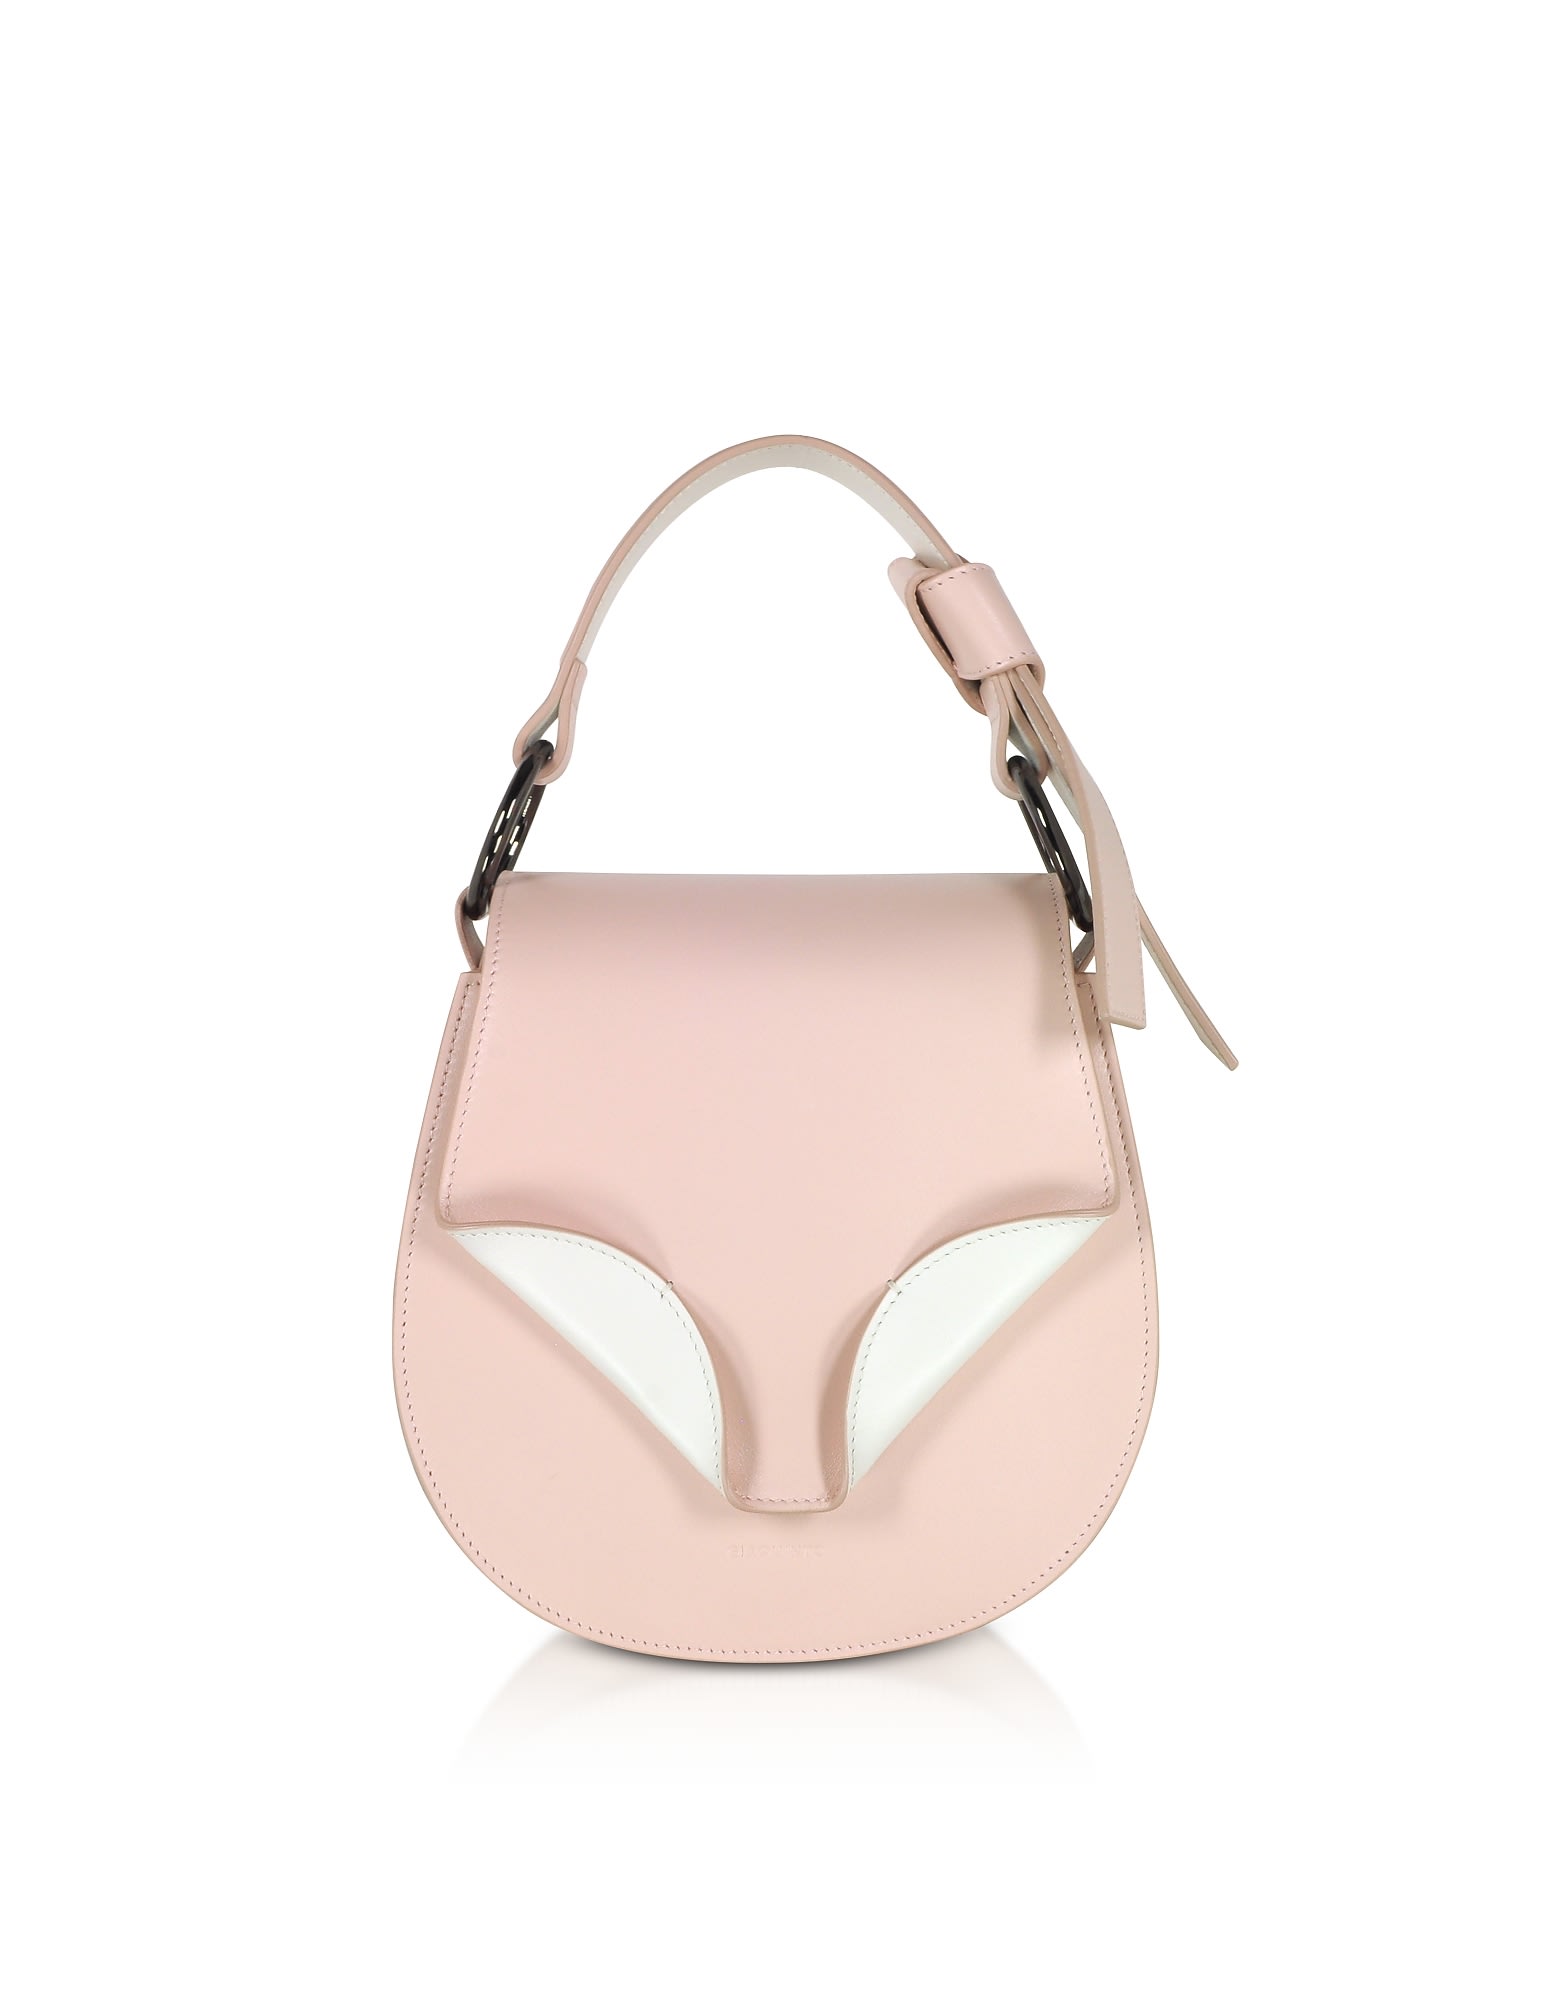 Giaquinto Leather Daphne Mini Shoulder Bag